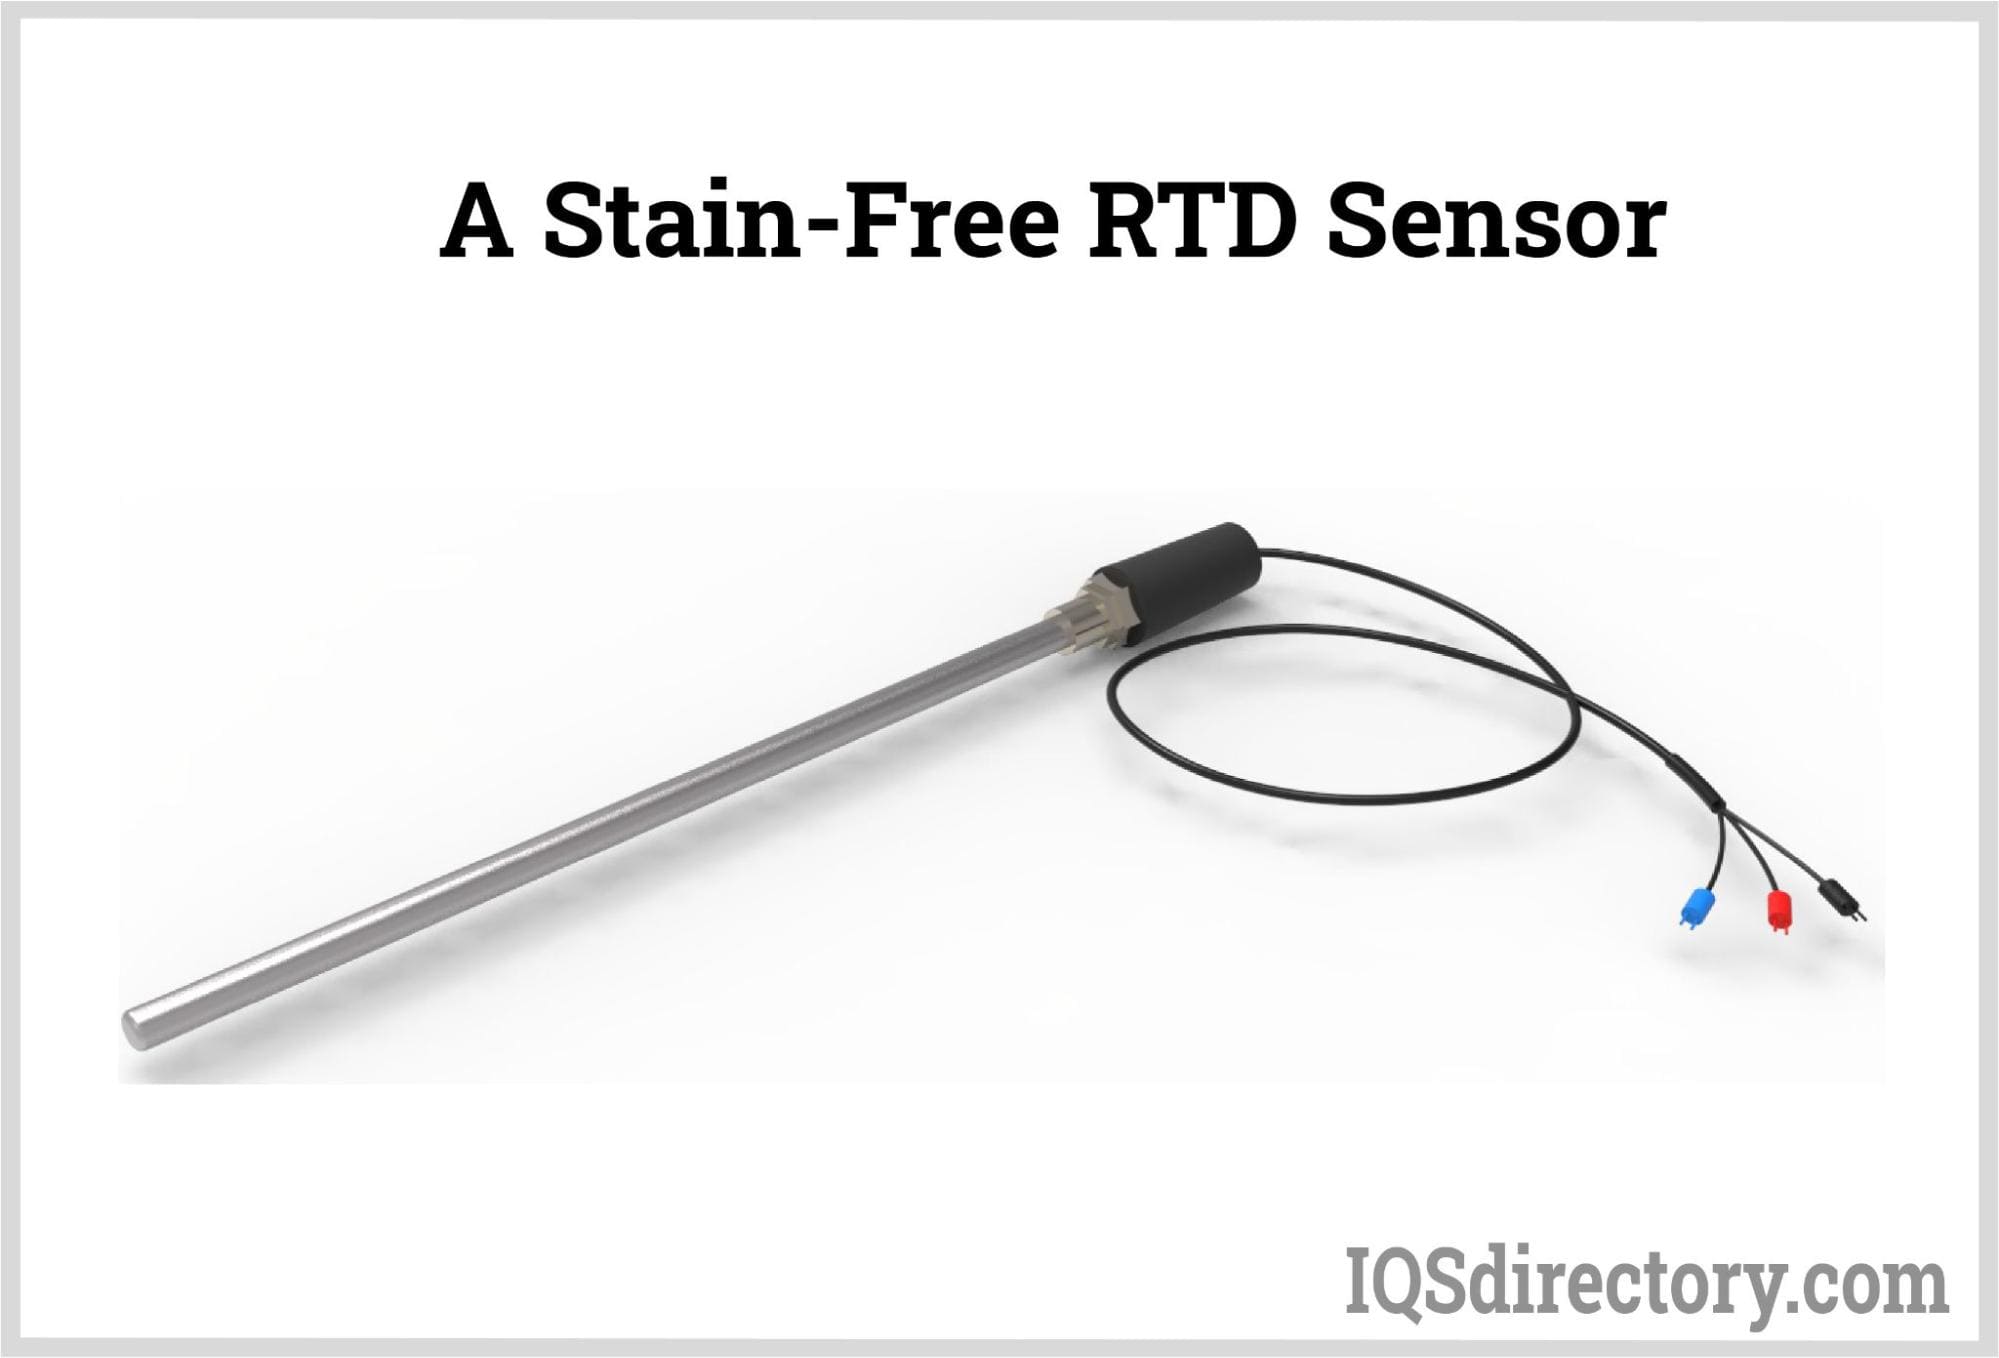 A stain-free RTD sensor